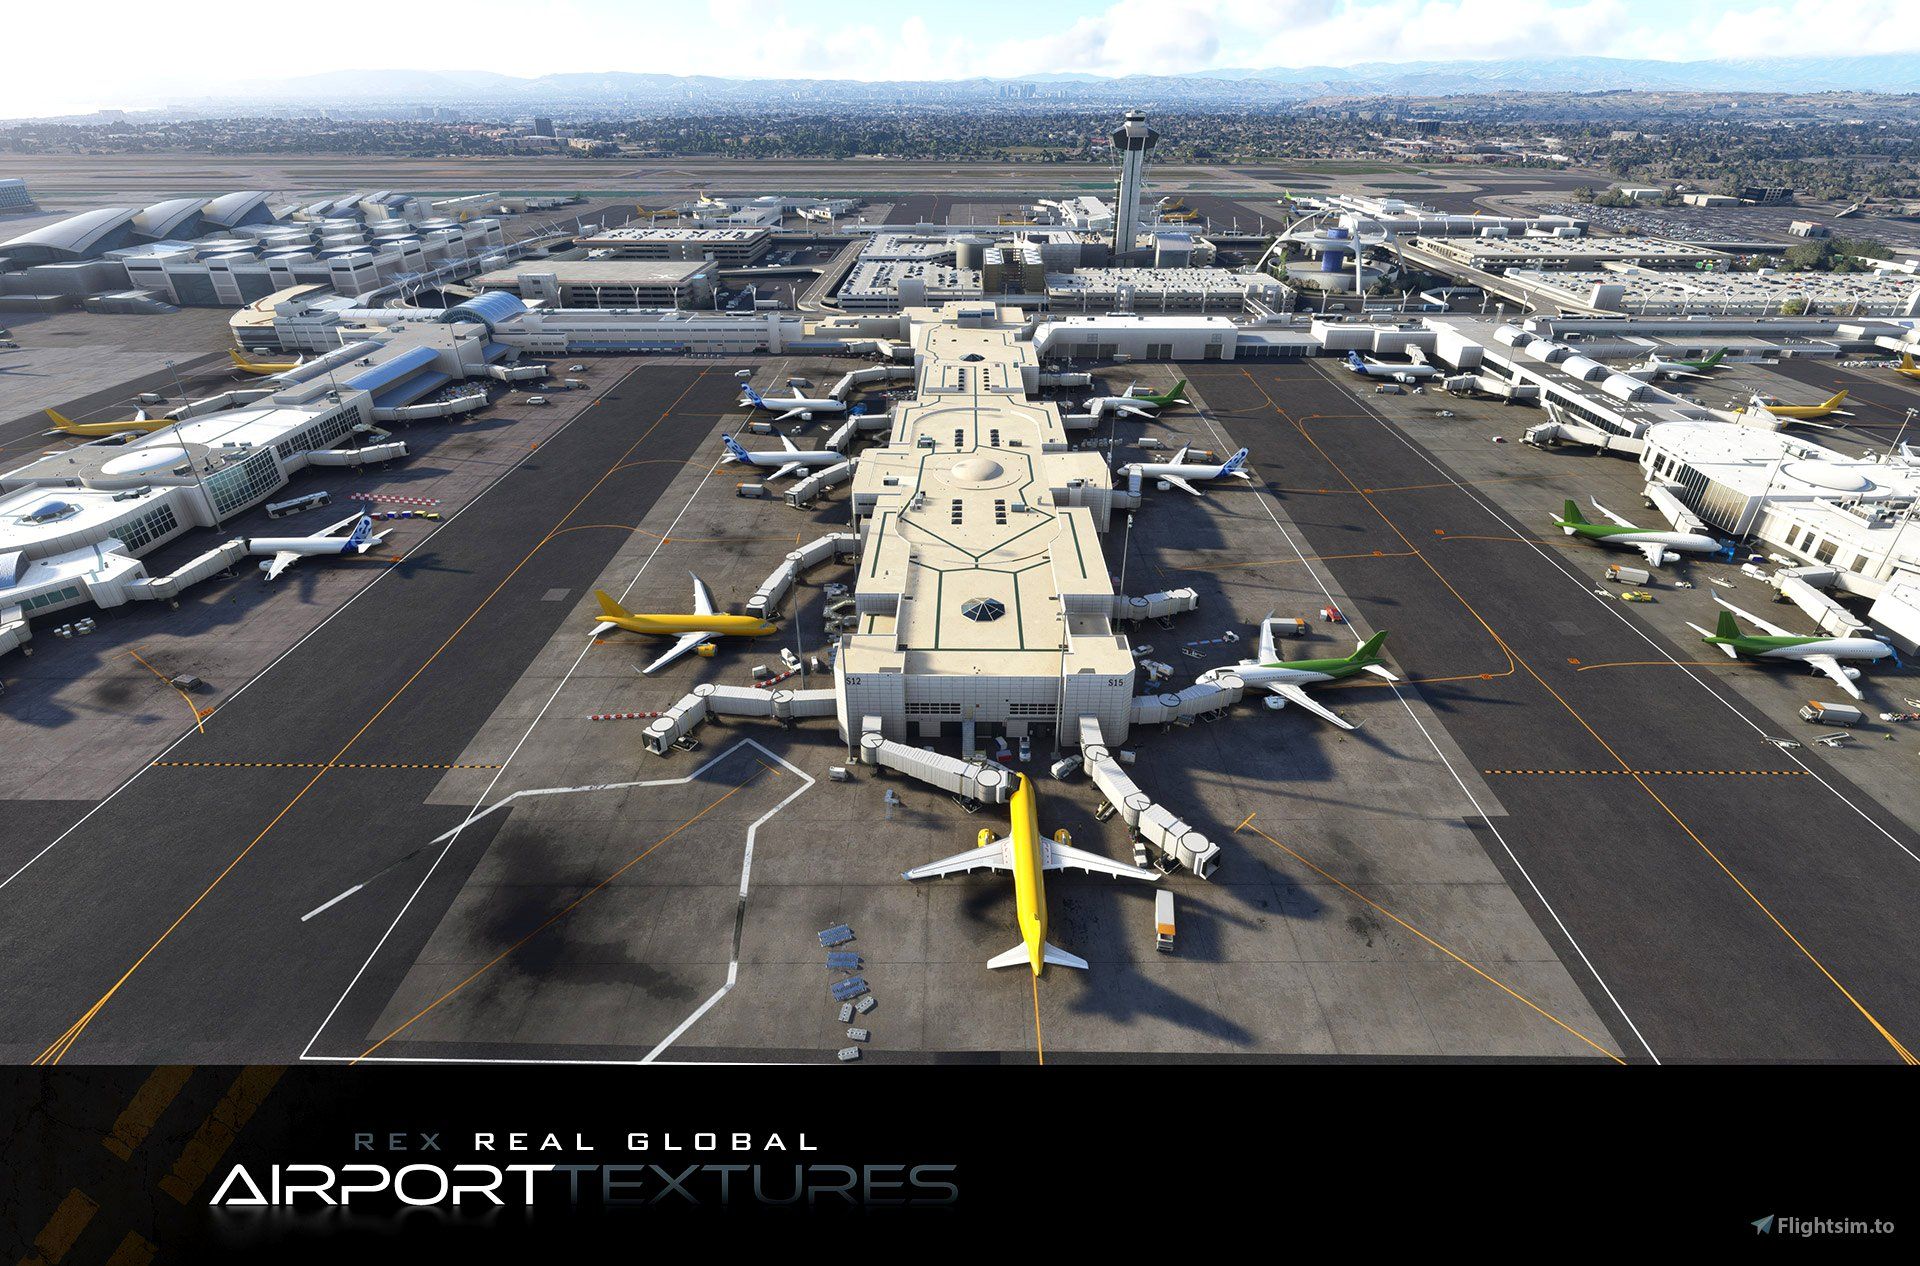 rex-real-global-airport-textures-vlJ0r